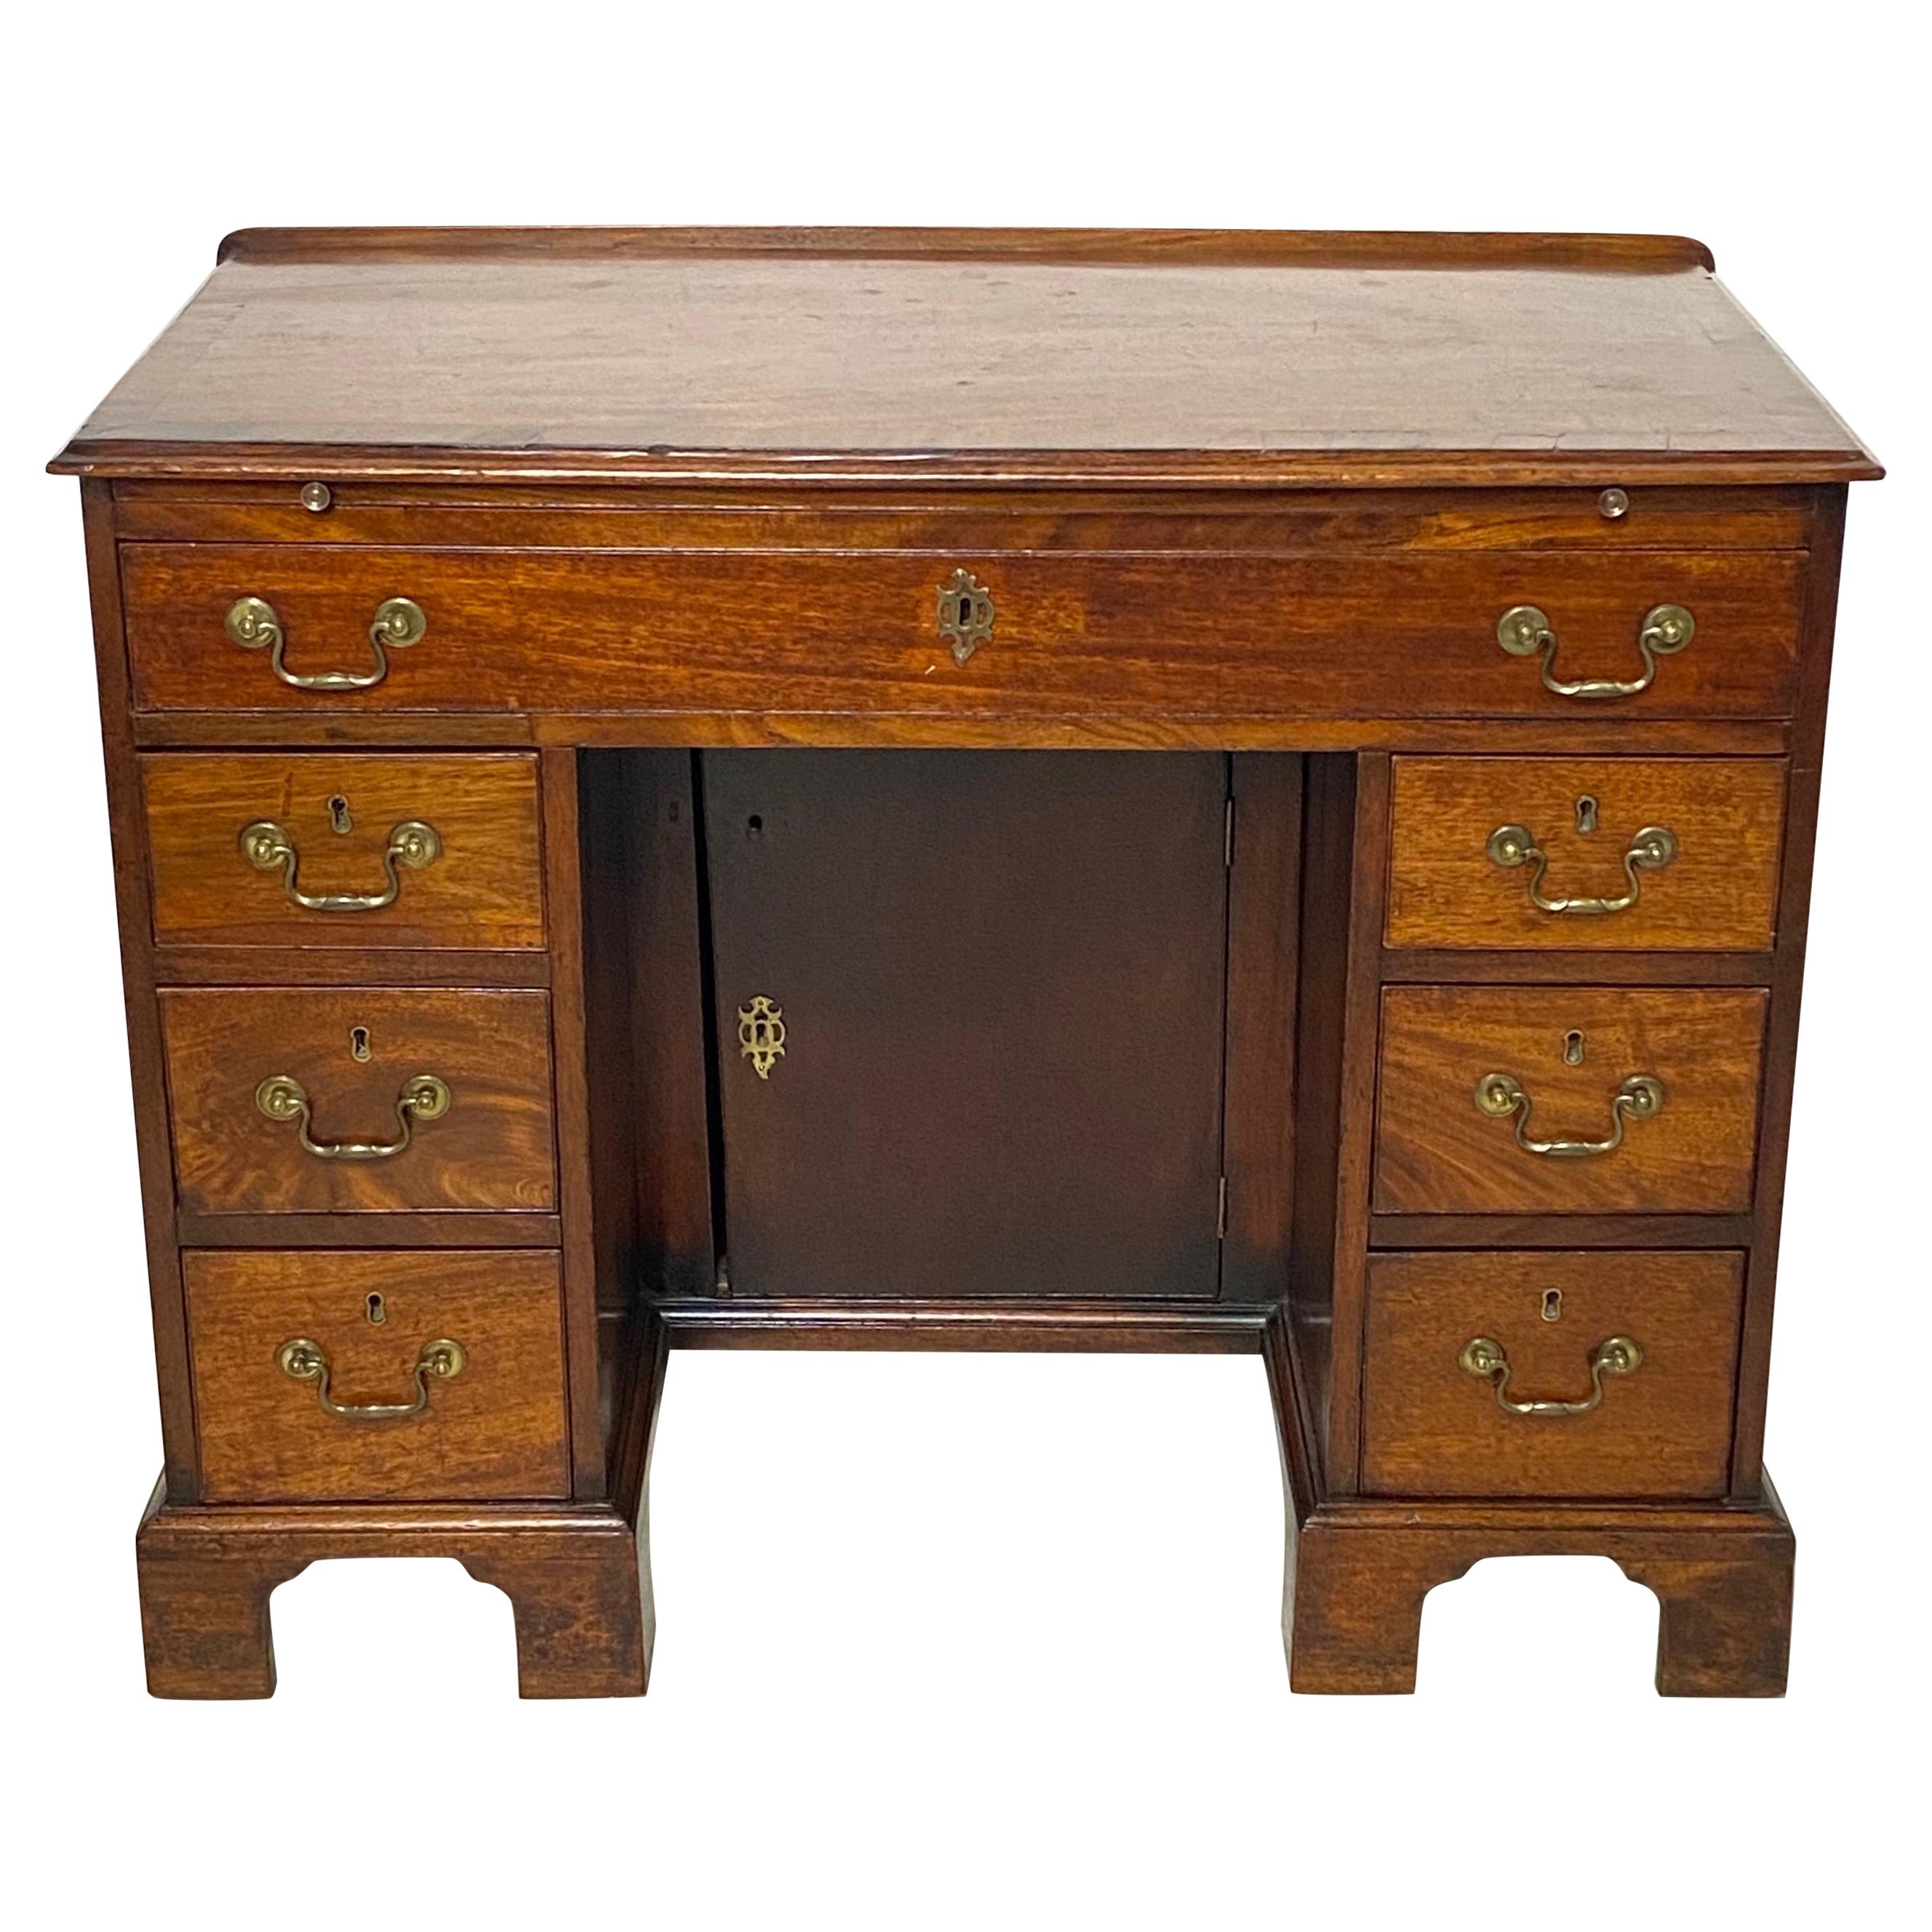 Georgian Mahogany Kneehole Desk, English Late 18th / Early 19th Century